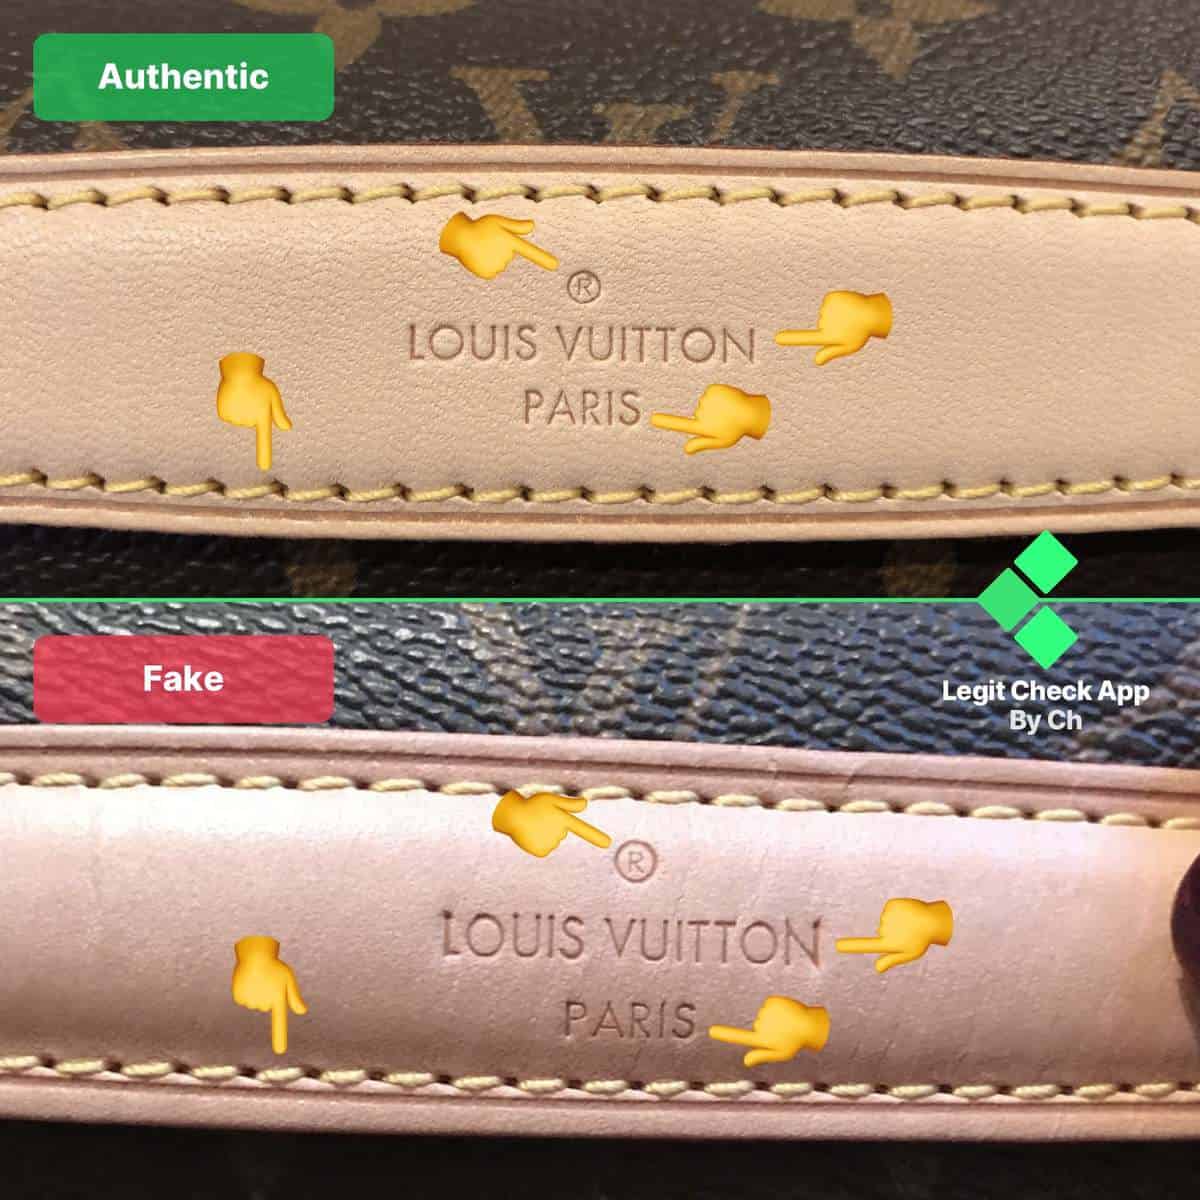 Real vs fake Louis Vuitton Pochette Metis East West HandBag 